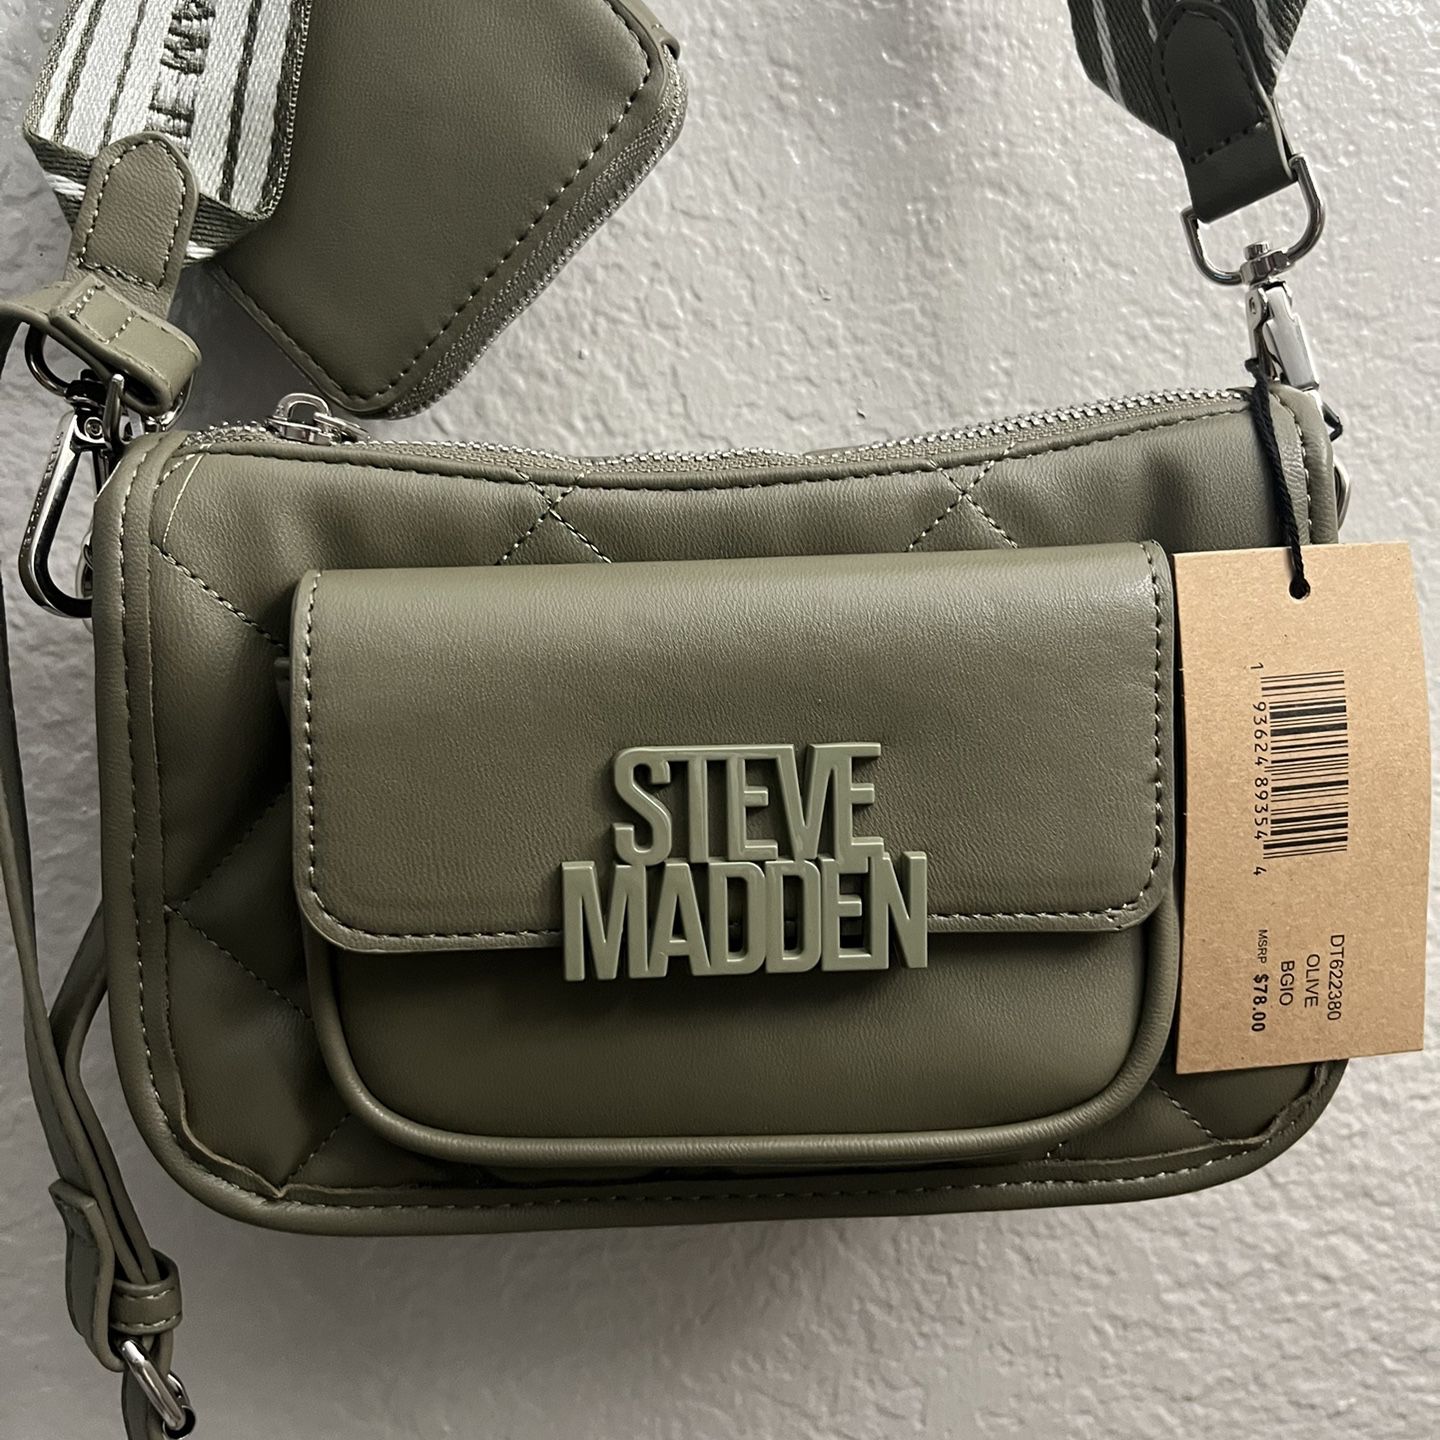 Steve Madden Gym Bag & Coin Purse for Sale in Riverside, CA - OfferUp